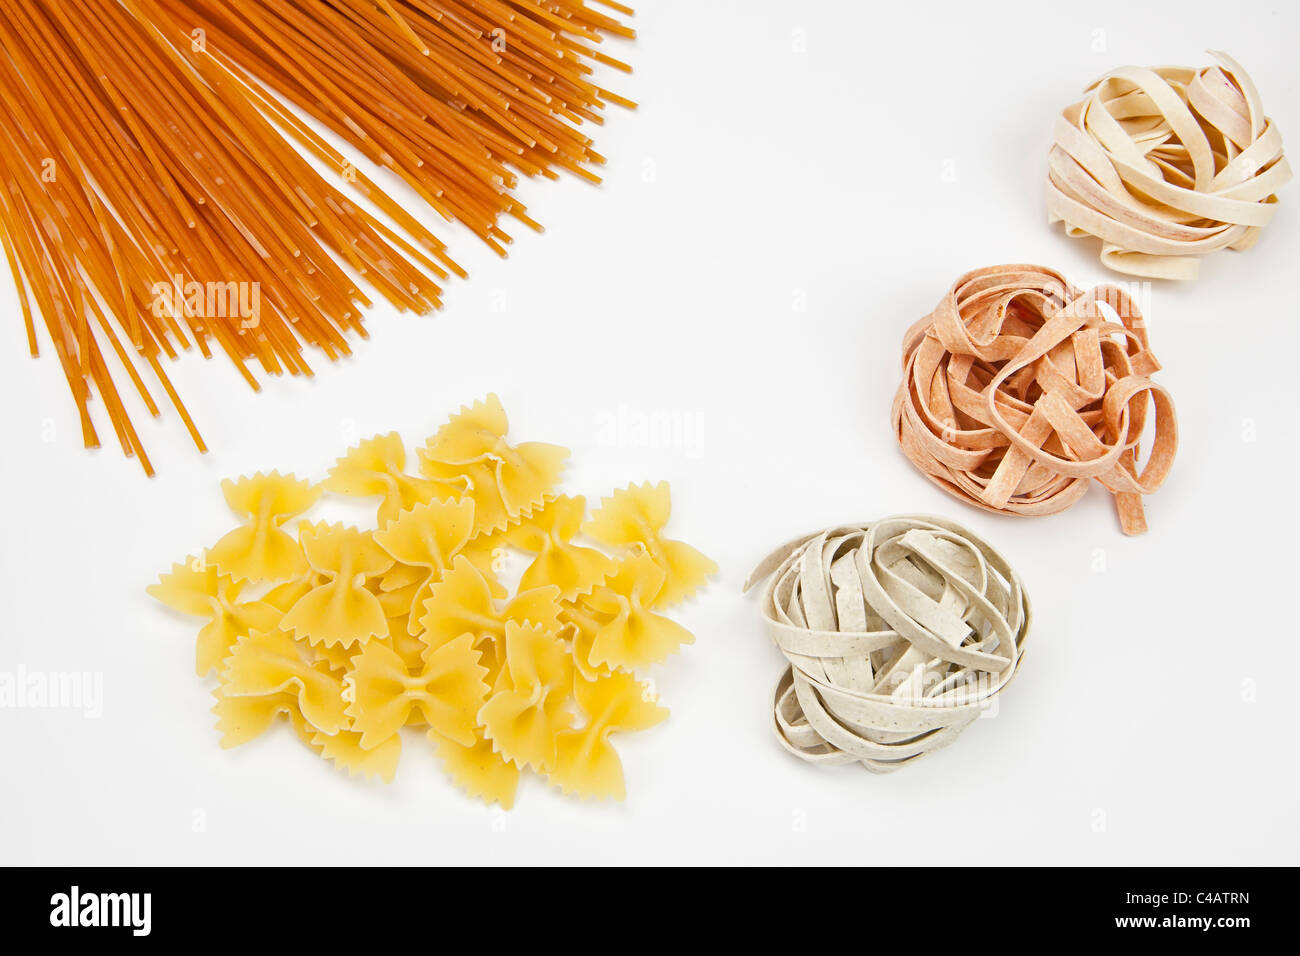 drei verschiedene Arten von Nudeln - Spaghetti, Farfalle, tagliatelle Stockfoto